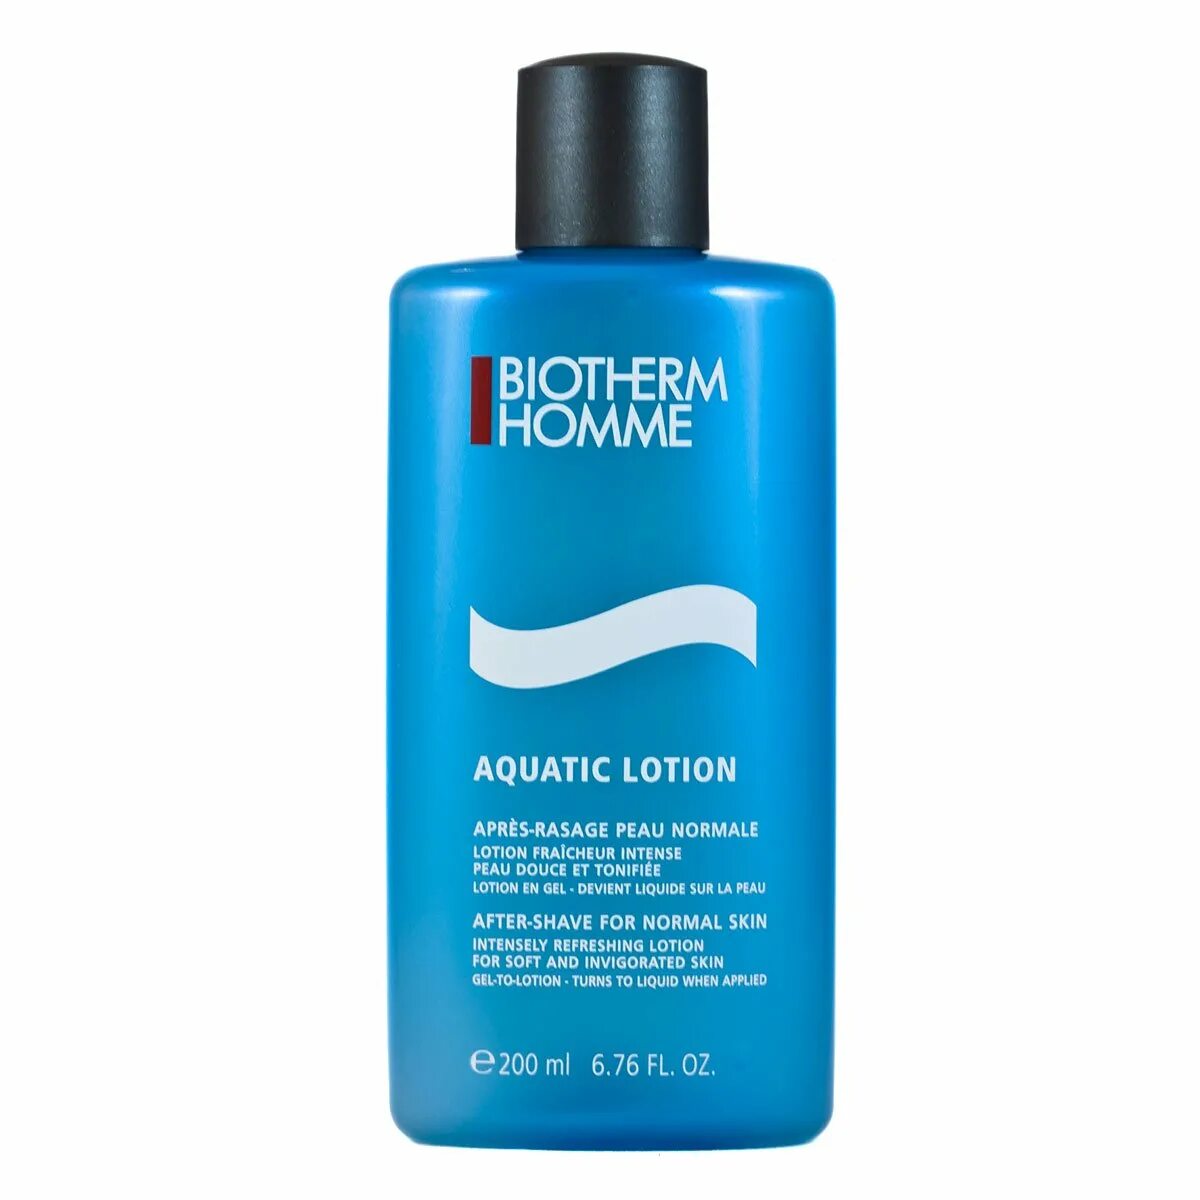 Biotherm homme Aquatic Lotion. Biotherm лосьон после бритья. Biotherm homme after Shave Lotion. Biotherm homme Balm. Biotherm gel